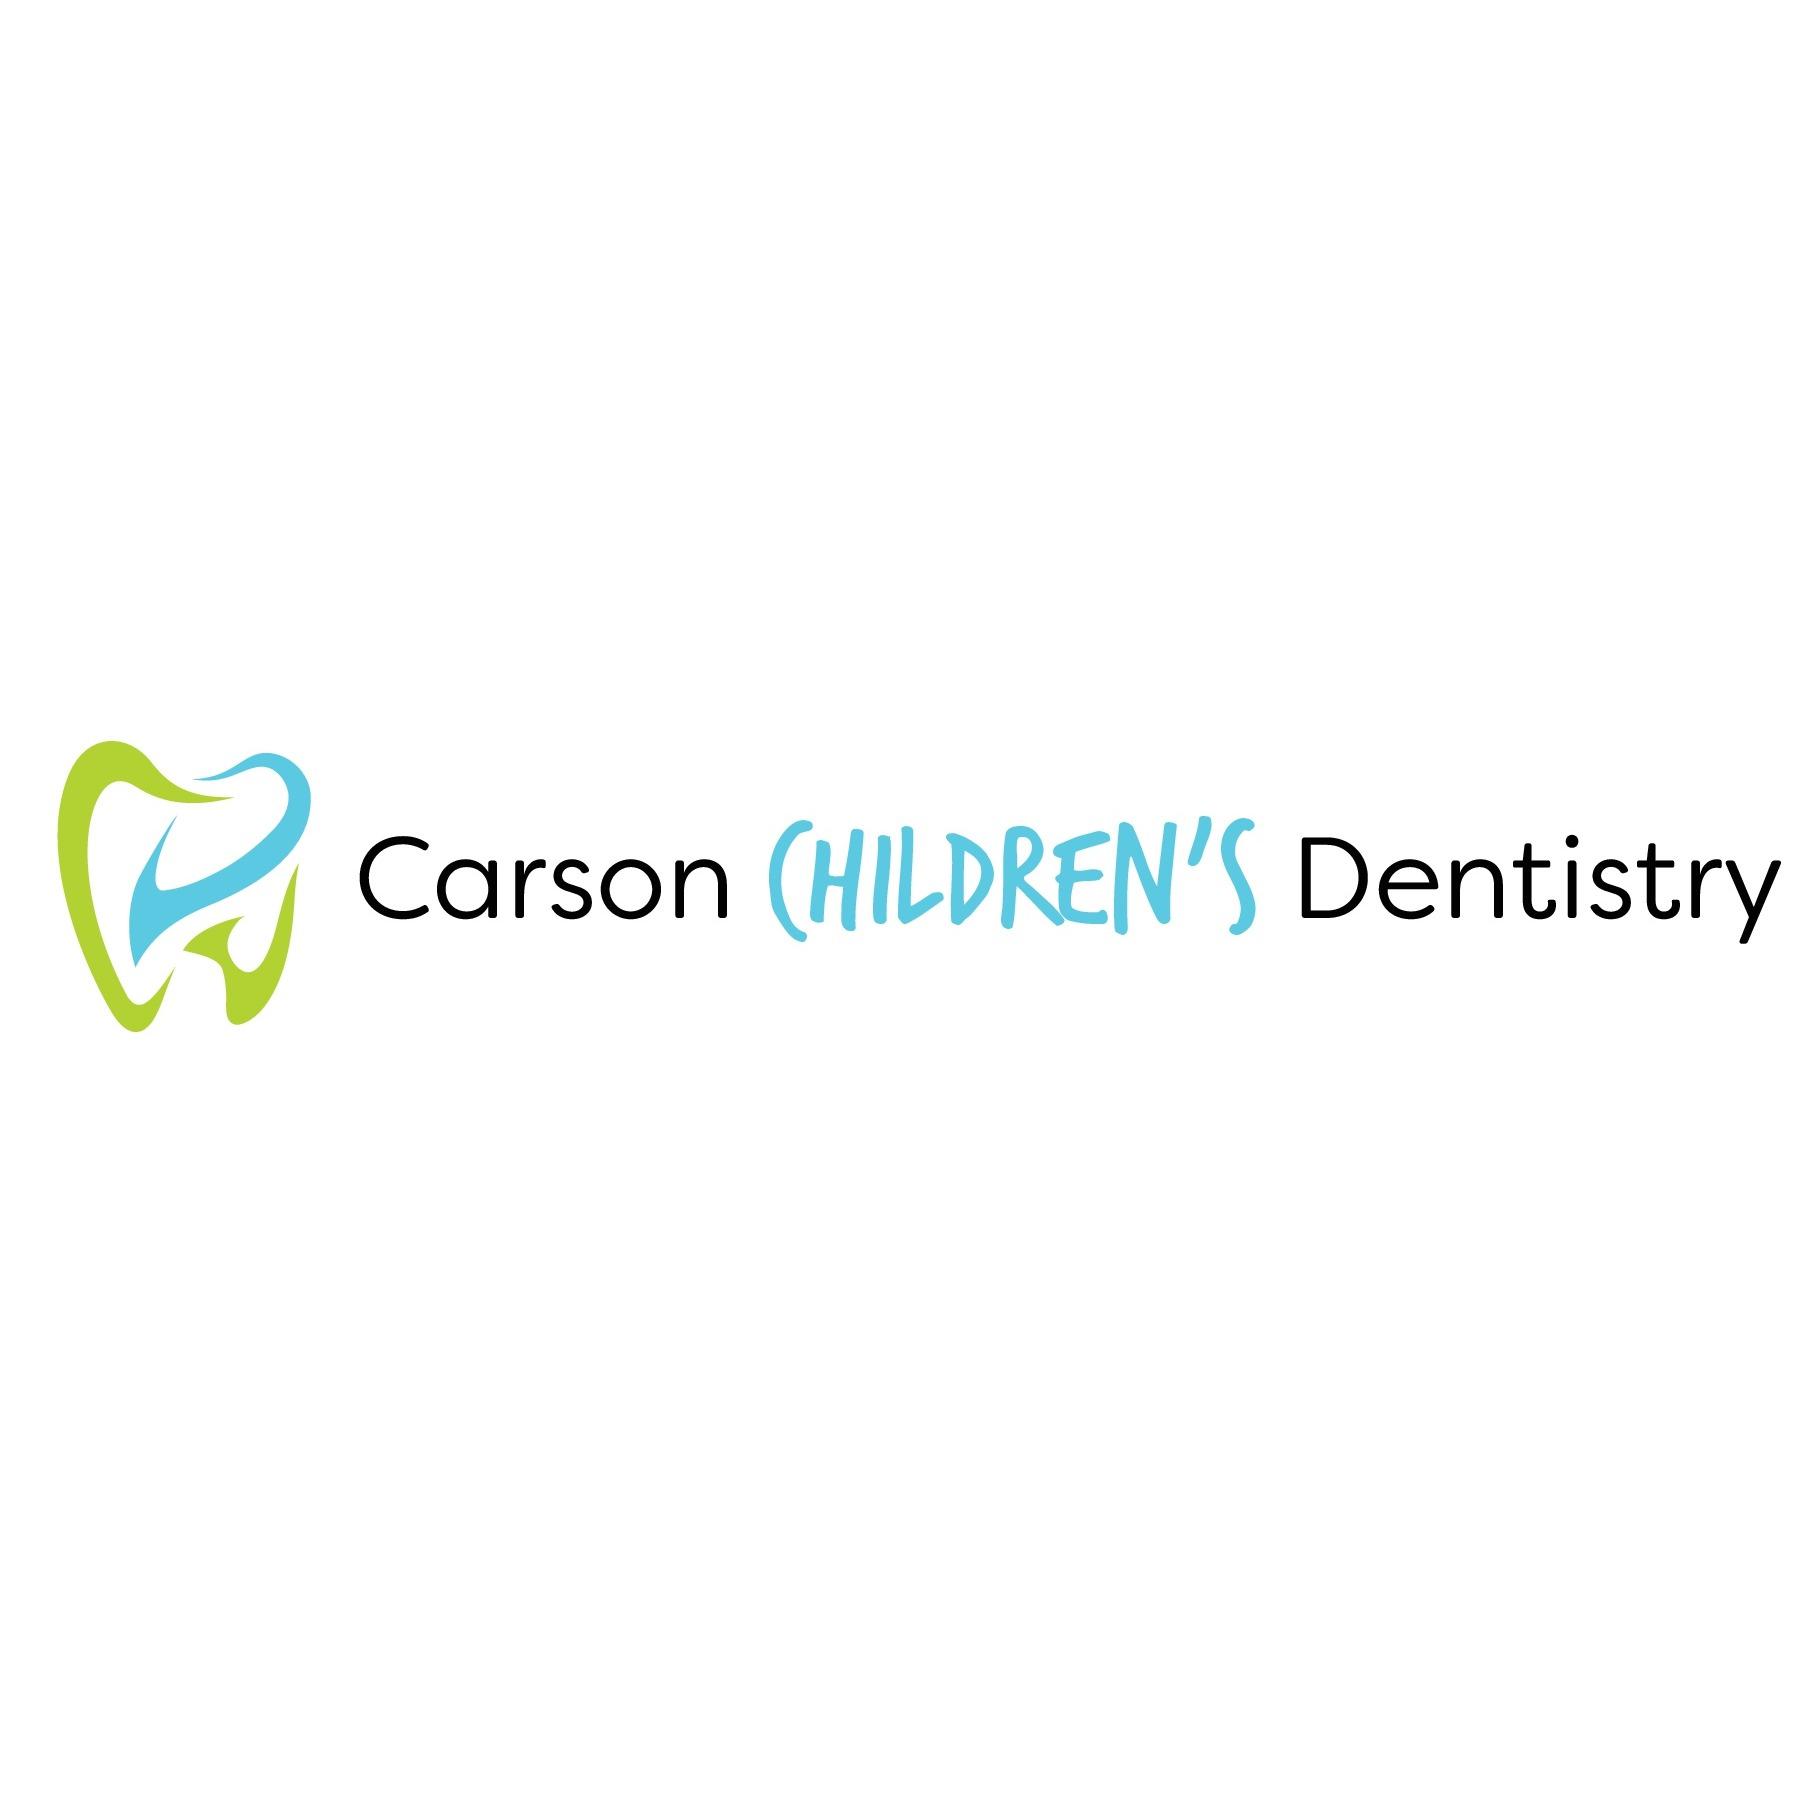 Carson Children's Dentistry Photo